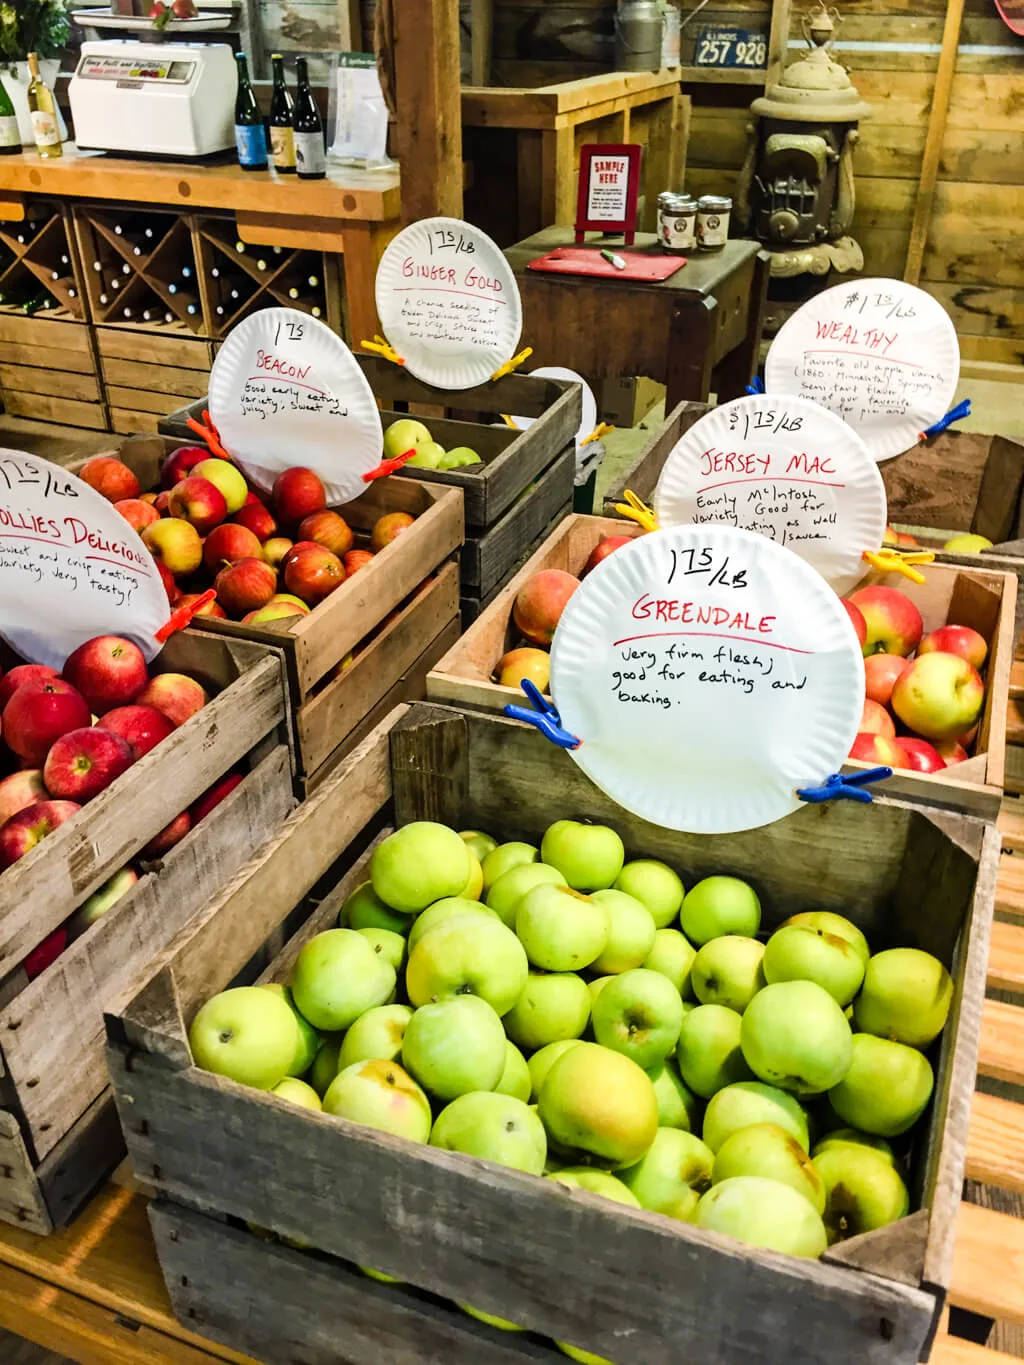 Apple varieties in crates at Brightonwoods Apple Orchard